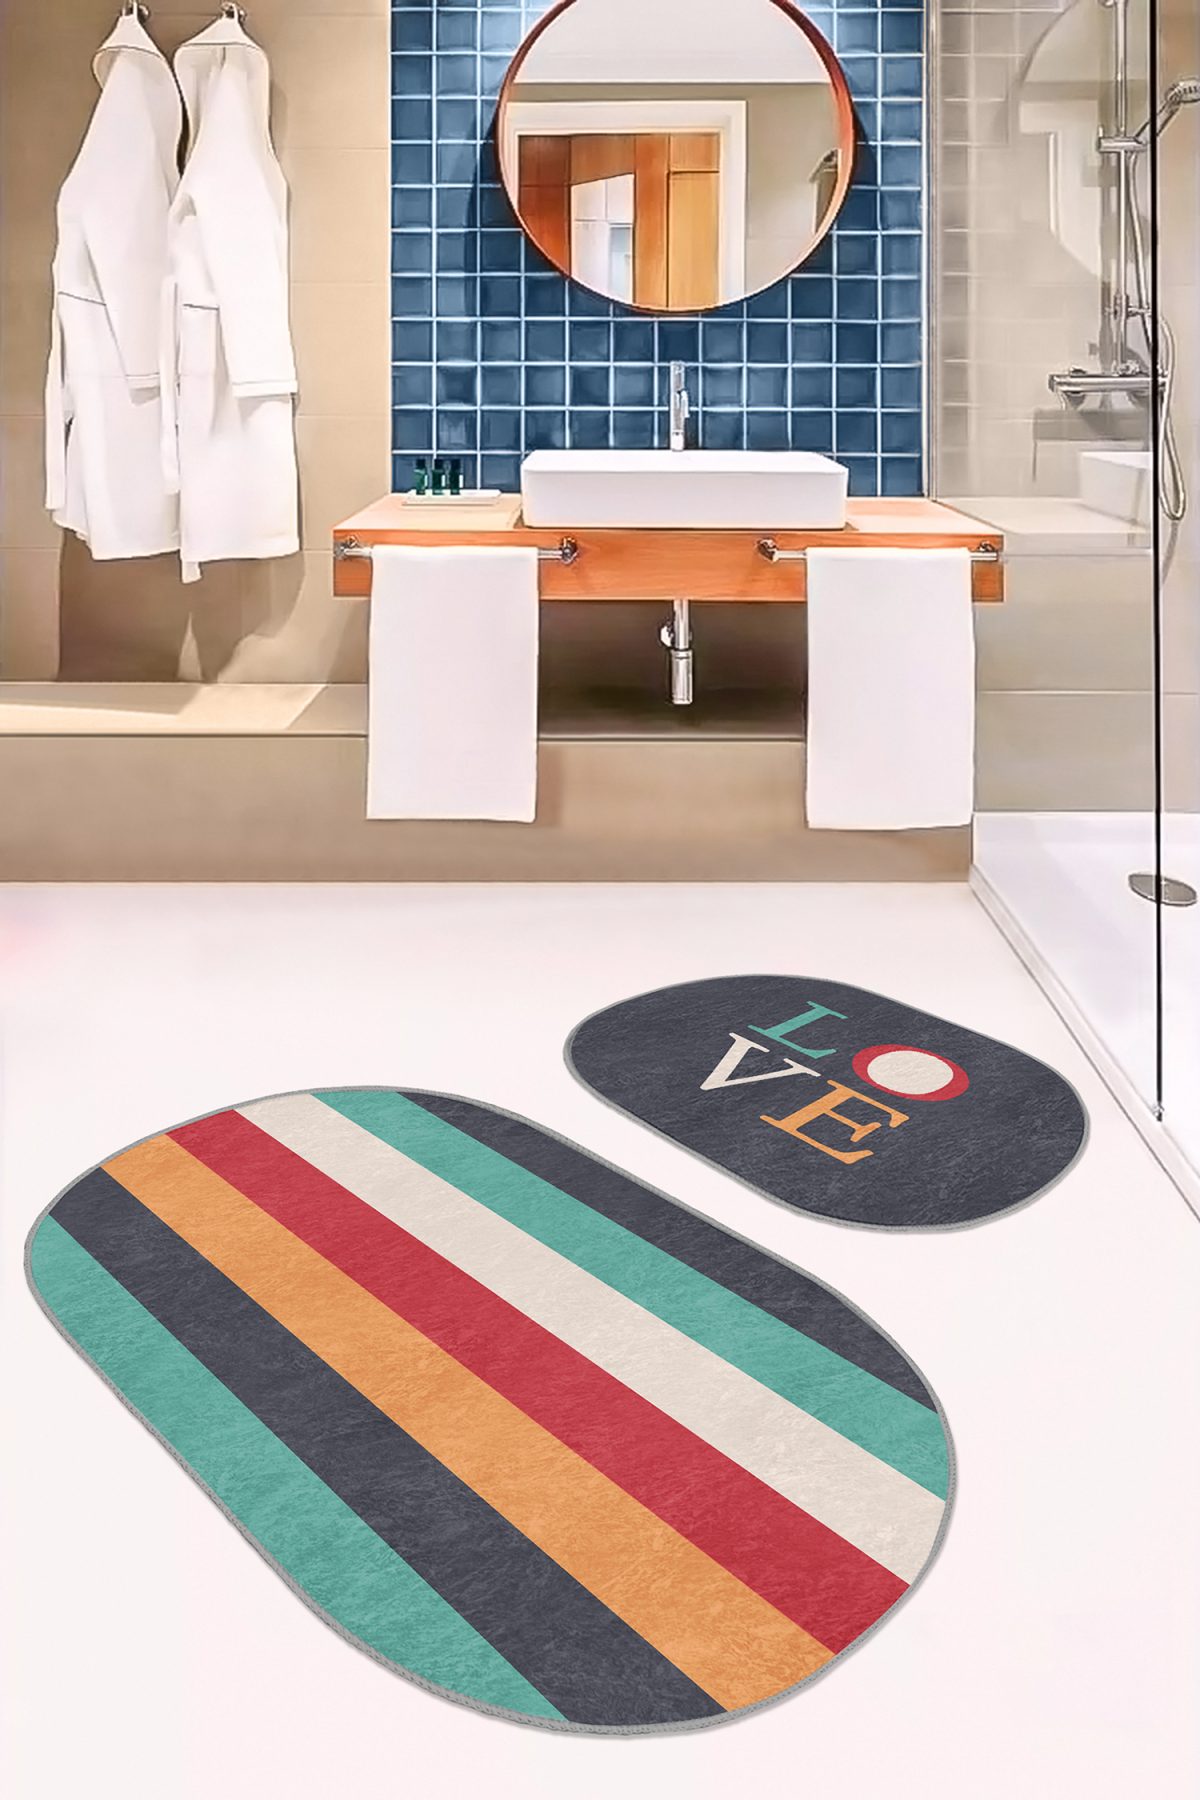 Renkli Love Temalı Renkli Çizgili 2'li Oval Kaymaz Tabanlı Mutfak Paspas Seti & Banyo Halı Takımı Realhomes